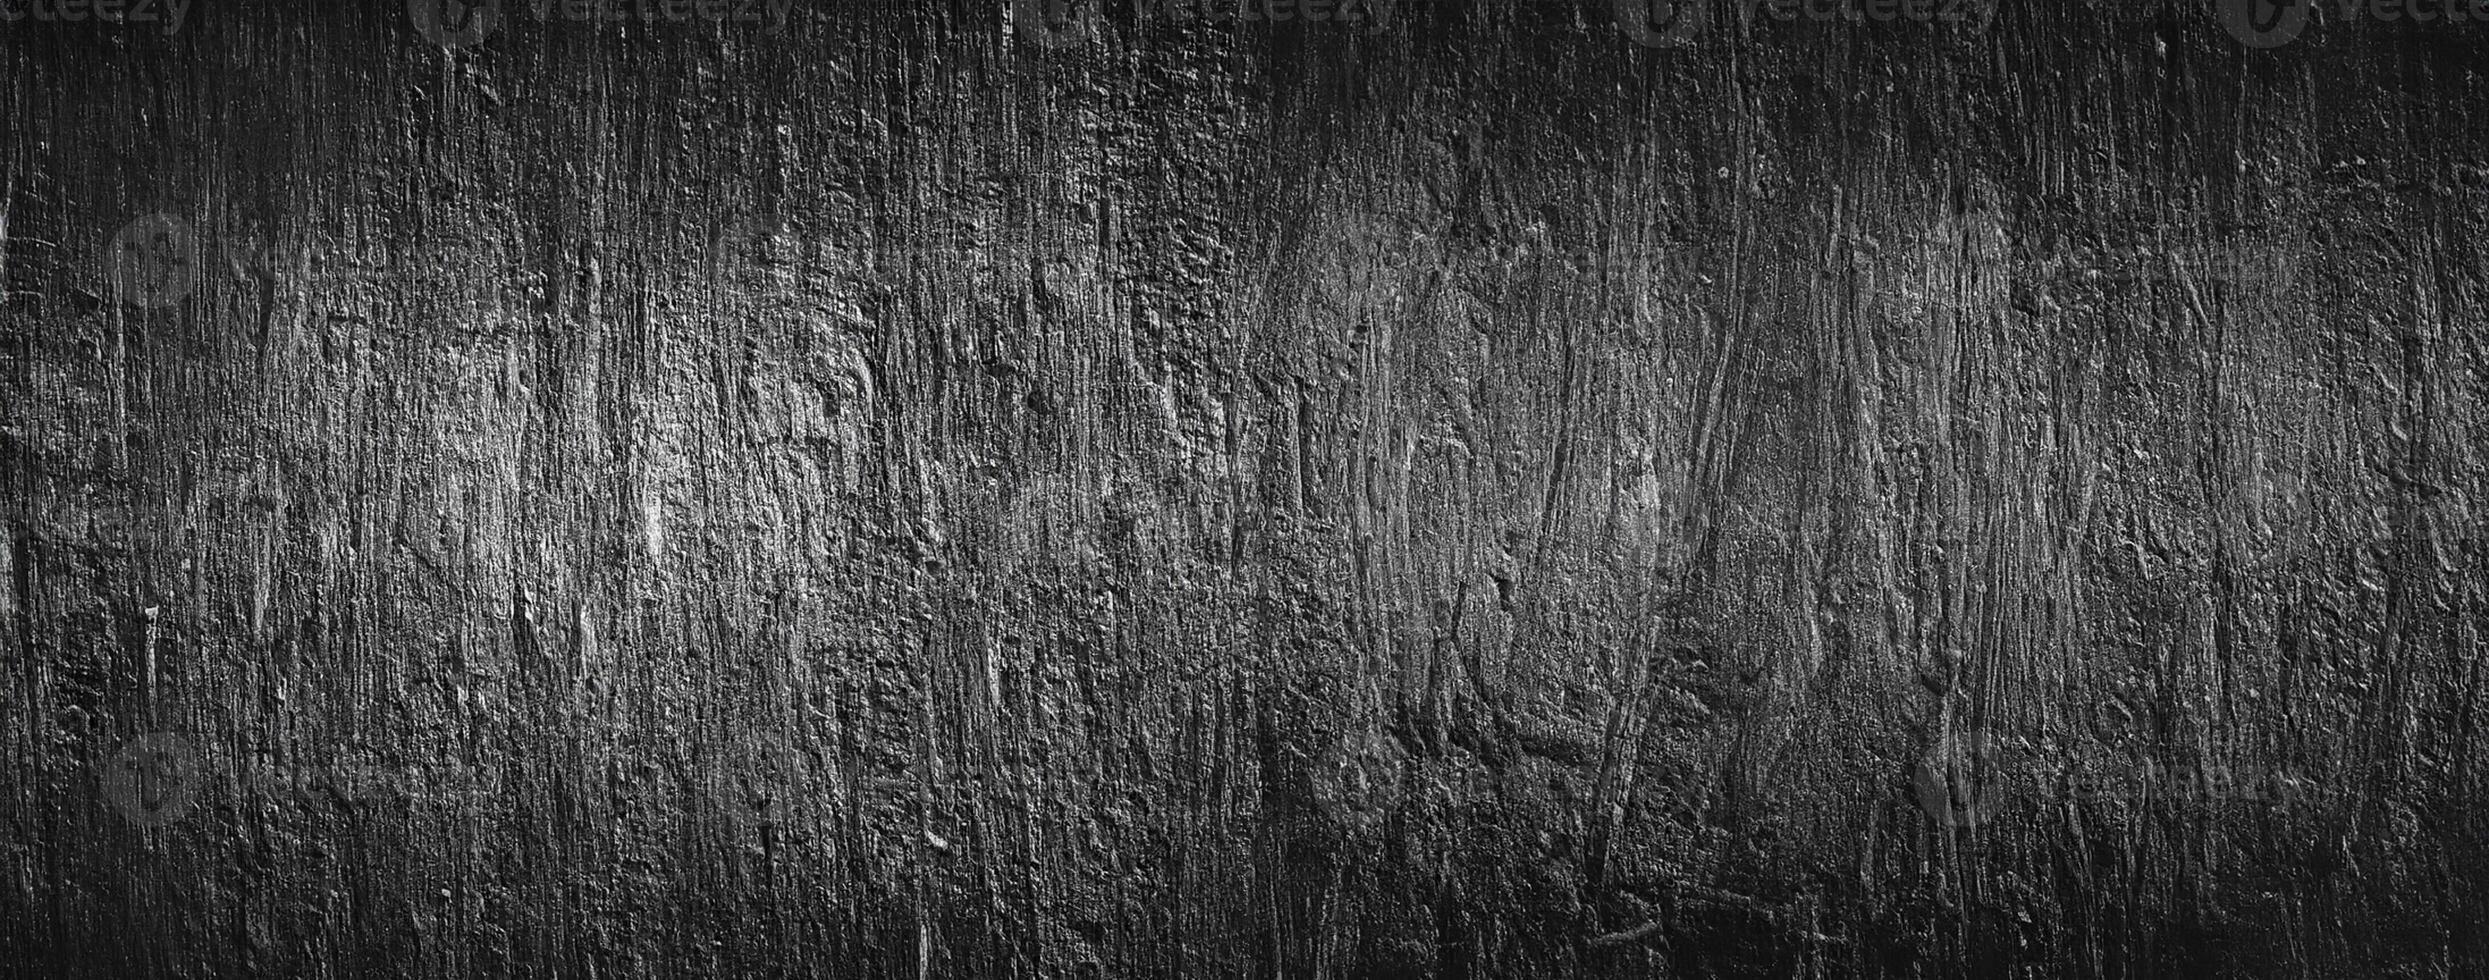 Sombrio Preto abstrato cimento concreto parede textura fundo foto